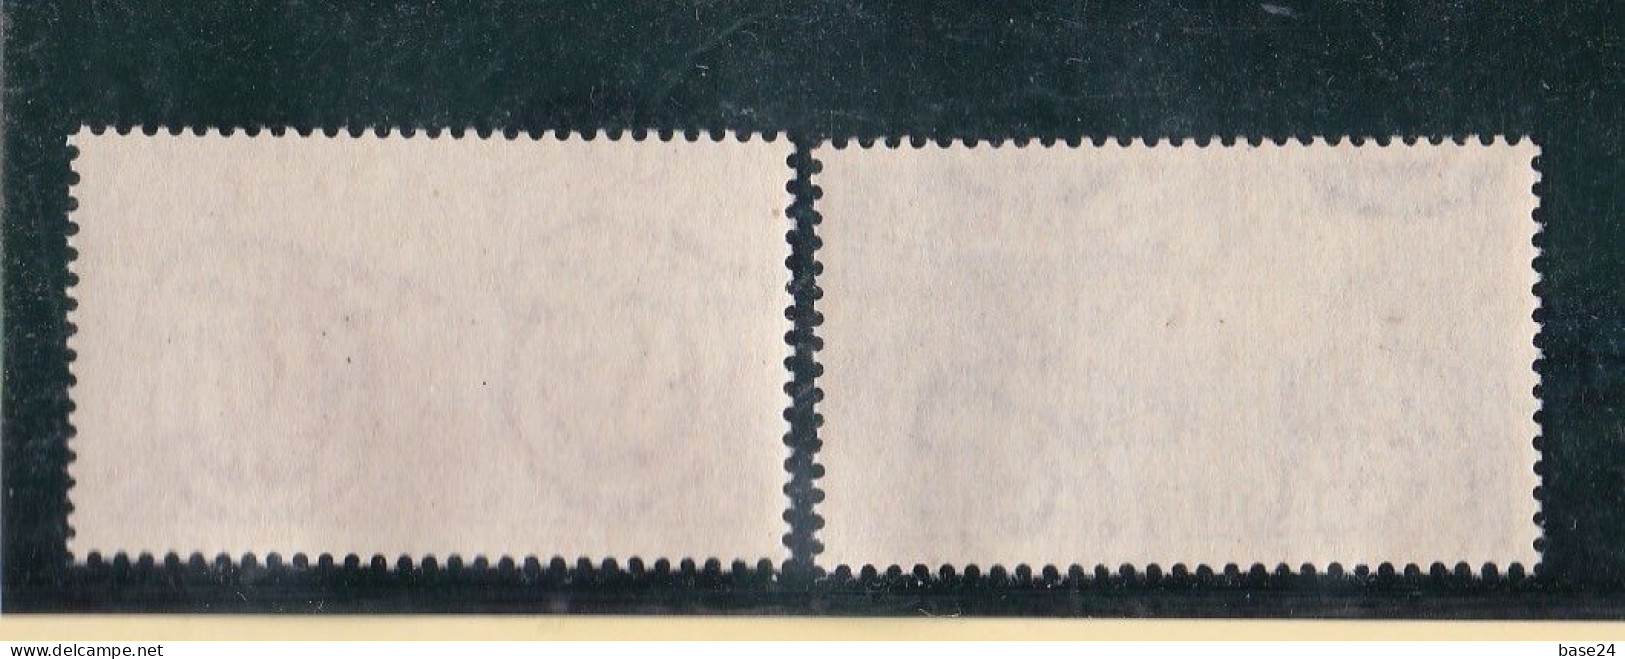 1950 San Marino Saint Marin ESPRESSO N°21-22 Serie Di 2 Valori MNH** Express - Express Letter Stamps